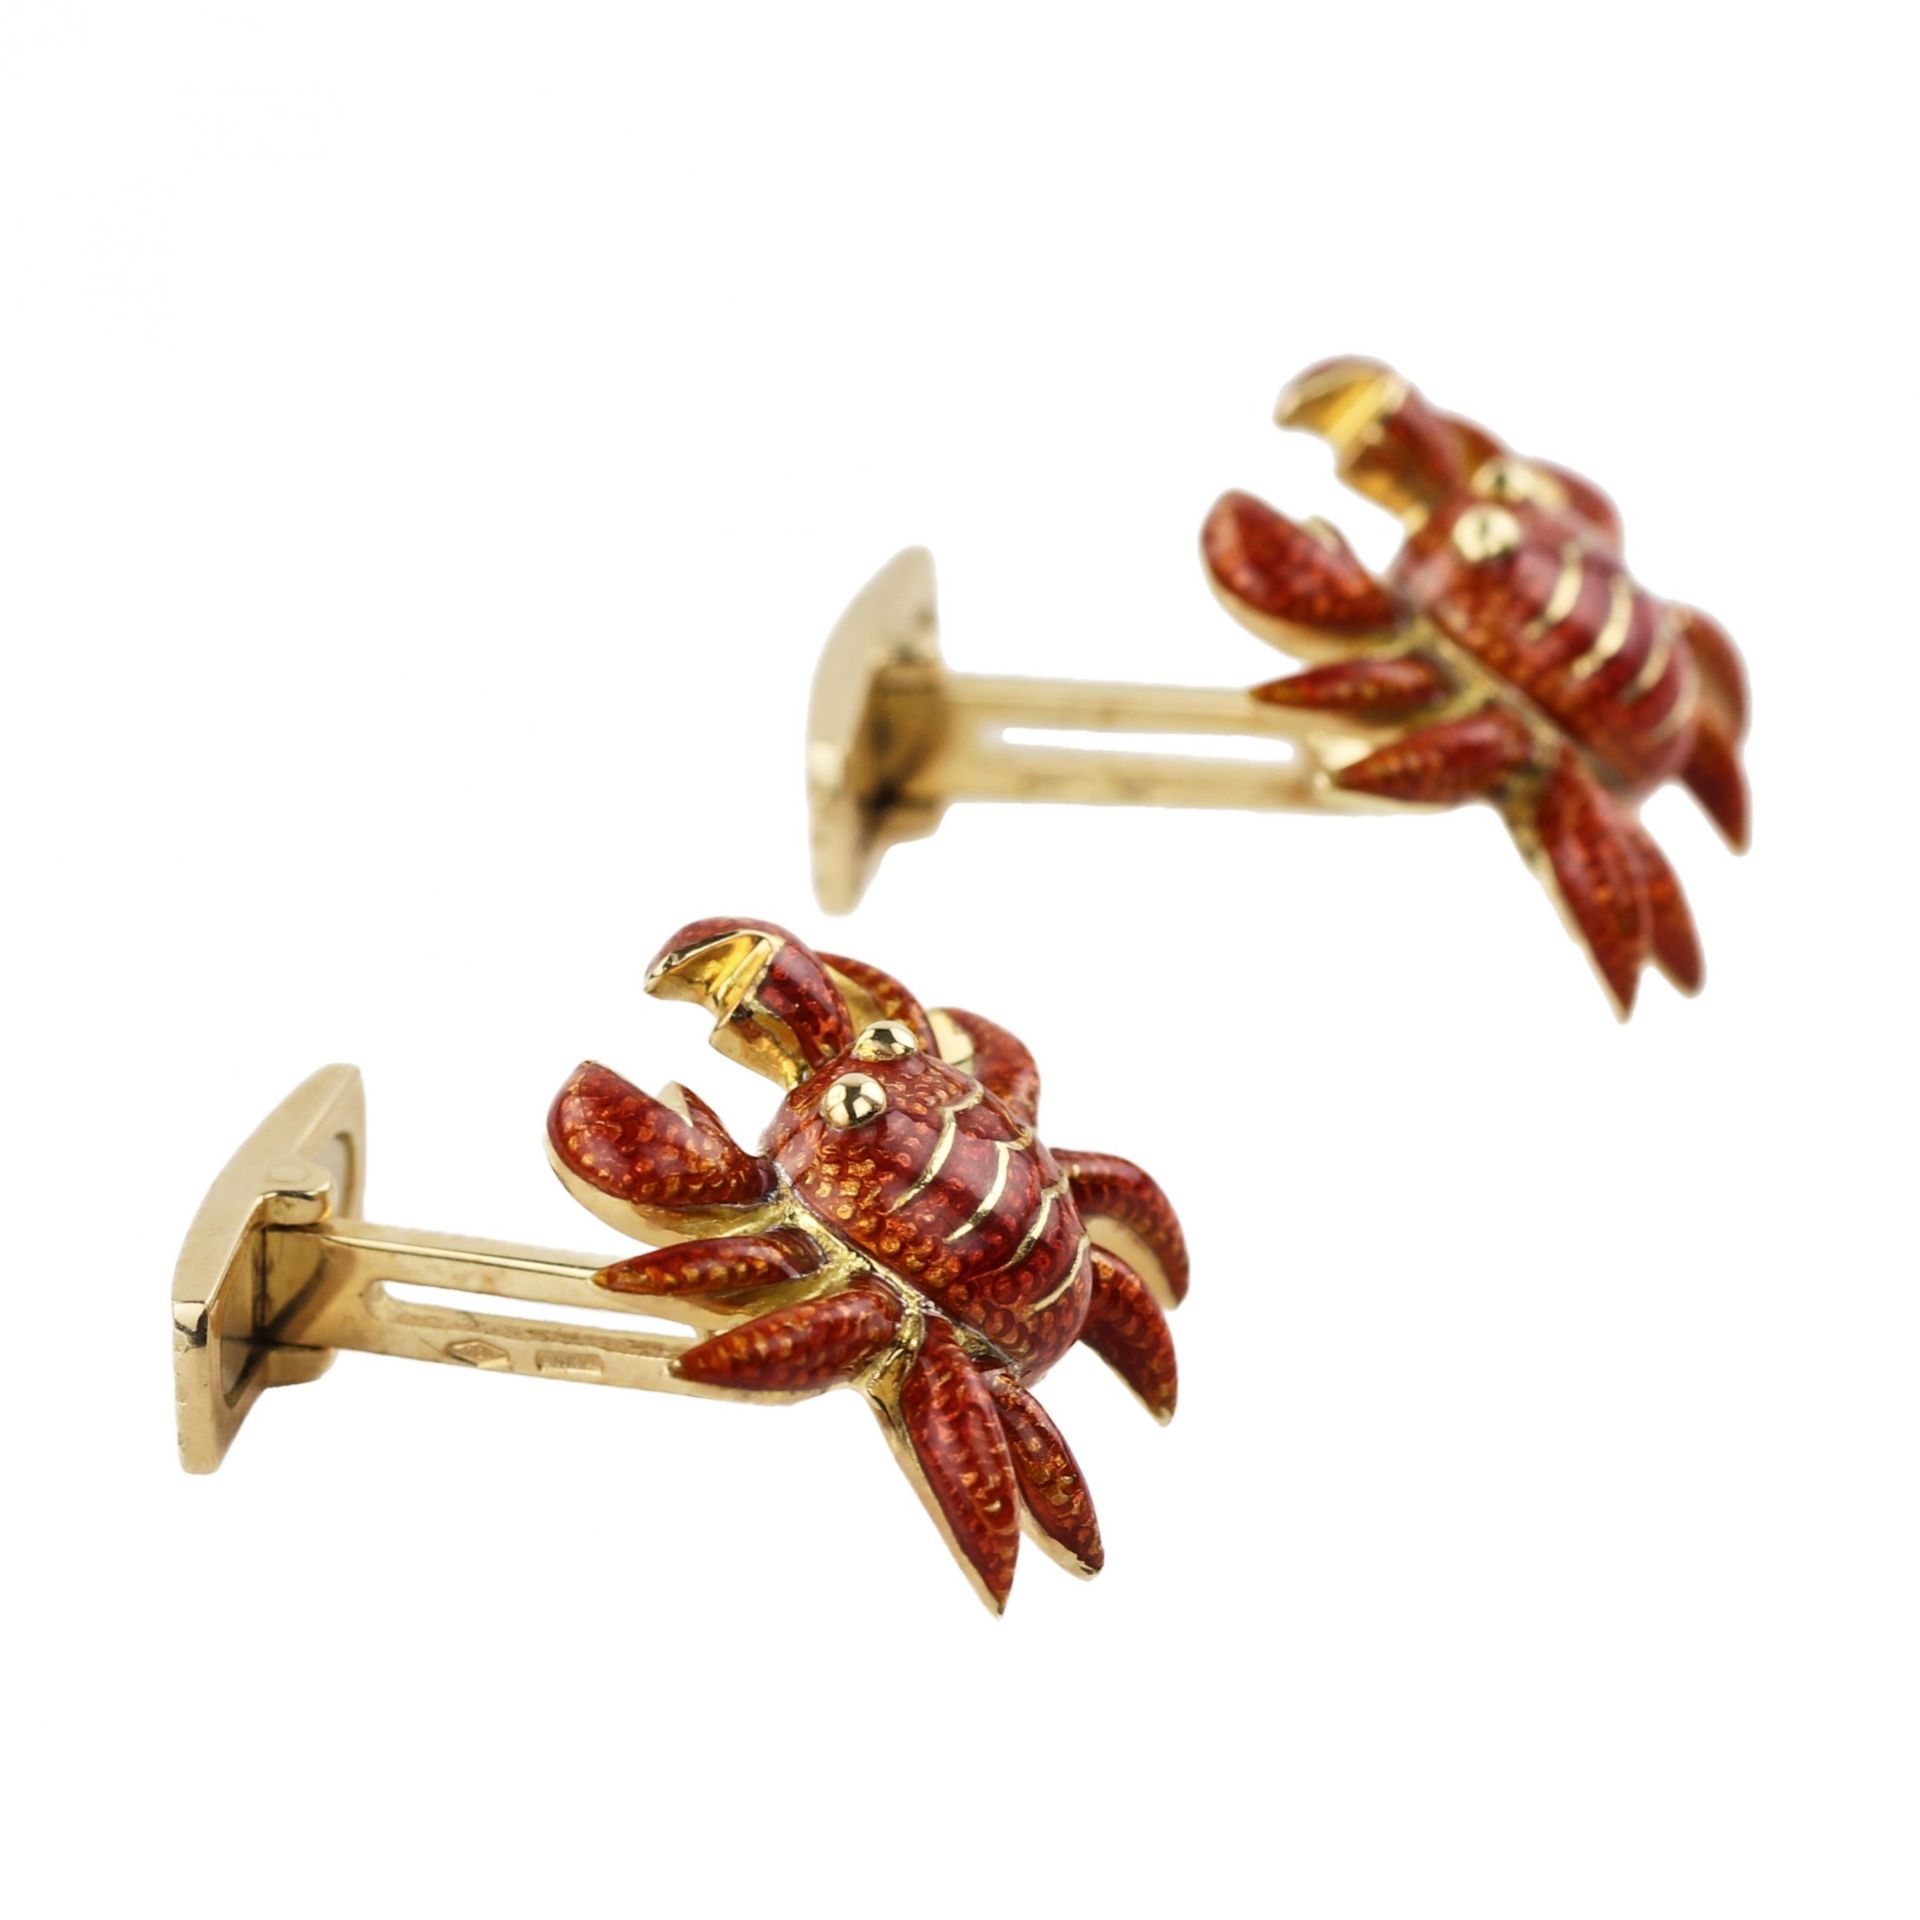 Gold cufflinks with enamel Italian work Crabs. - Image 4 of 6